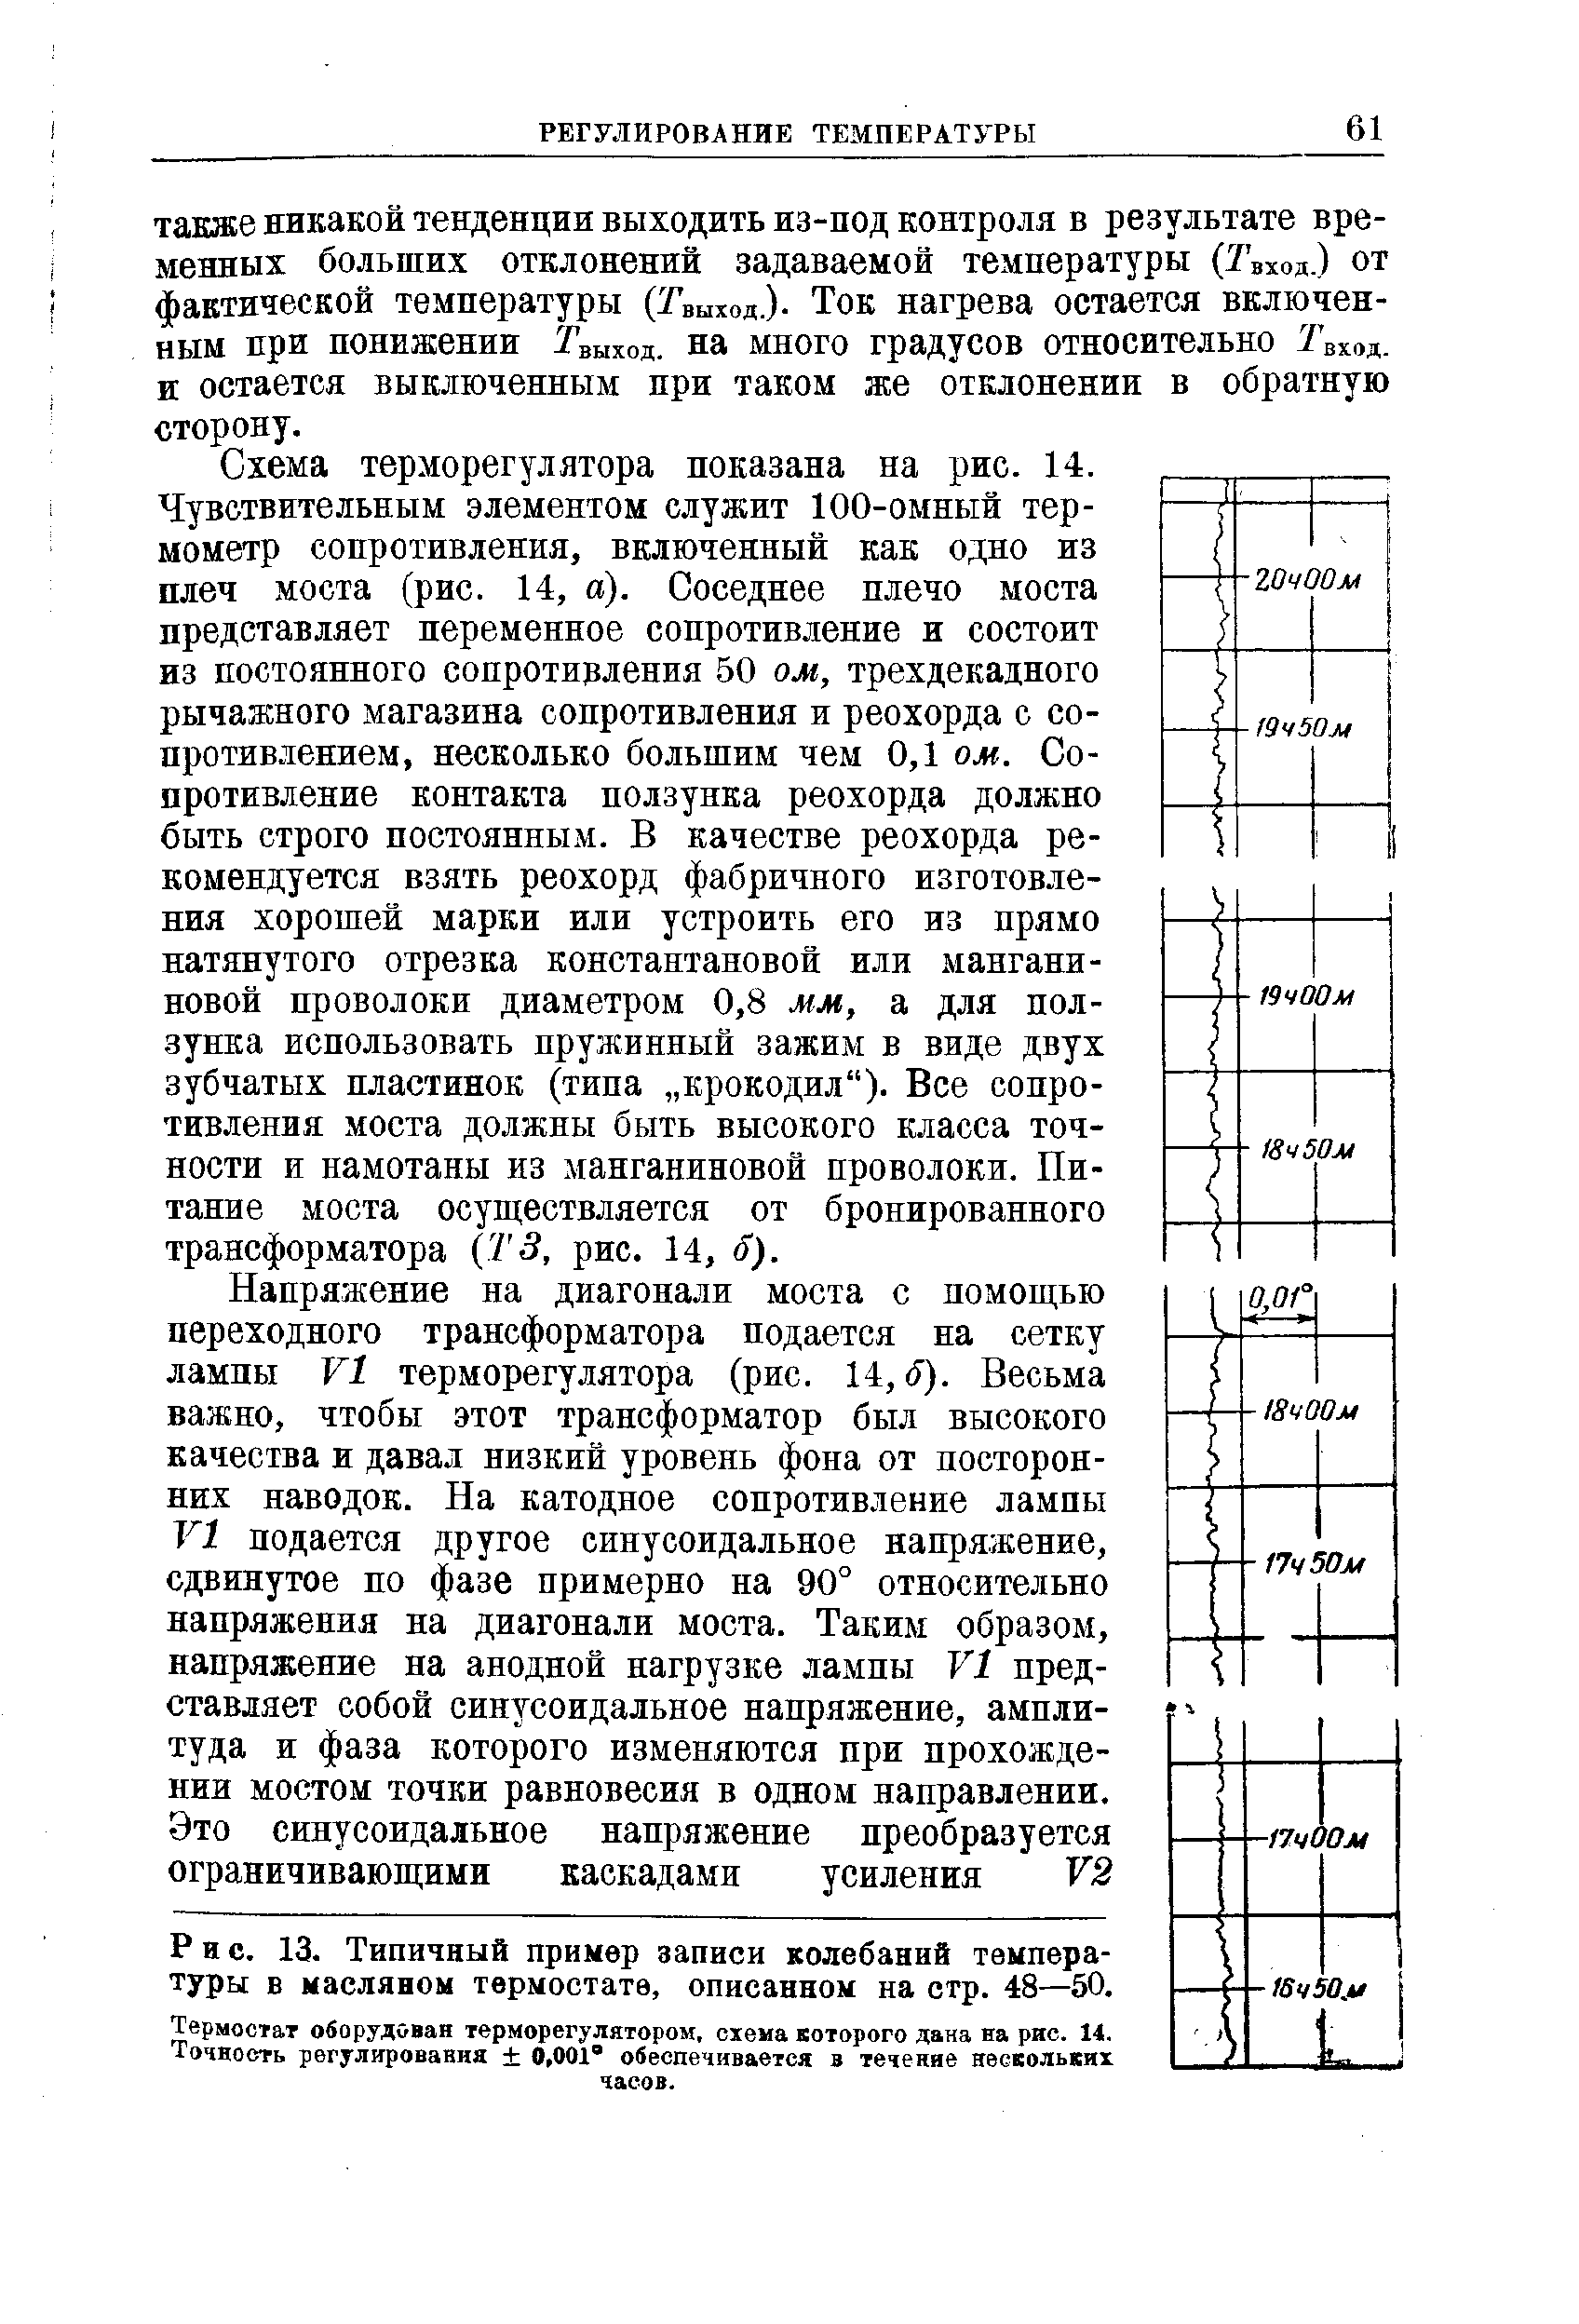 Схема терморегулятора показана на рис. 14.